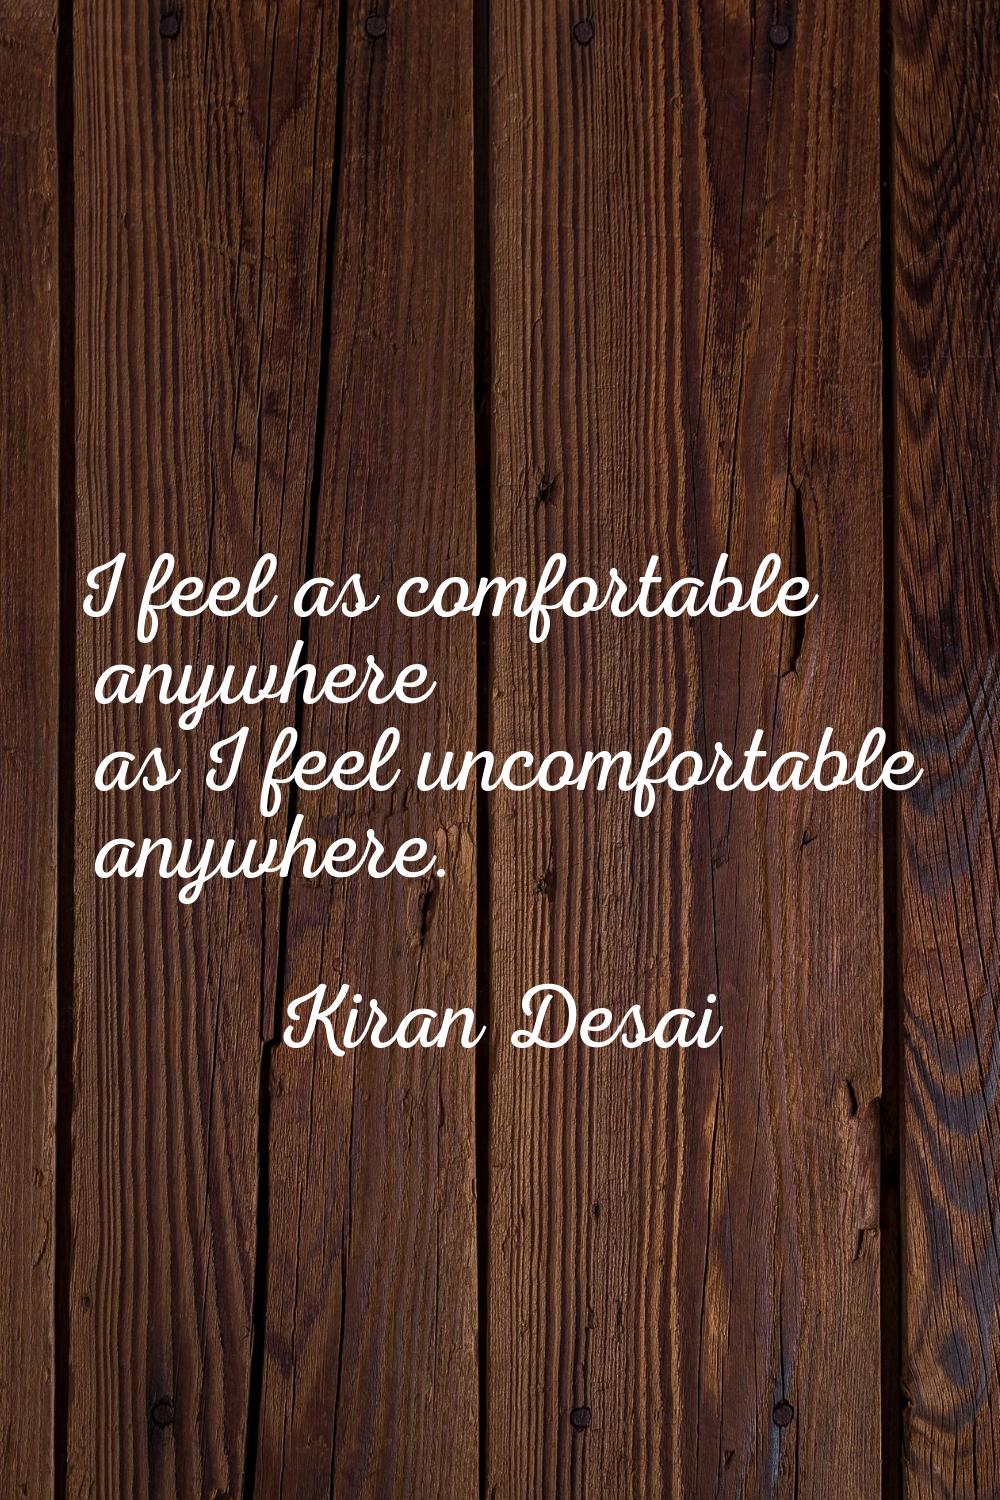 I feel as comfortable anywhere as I feel uncomfortable anywhere.